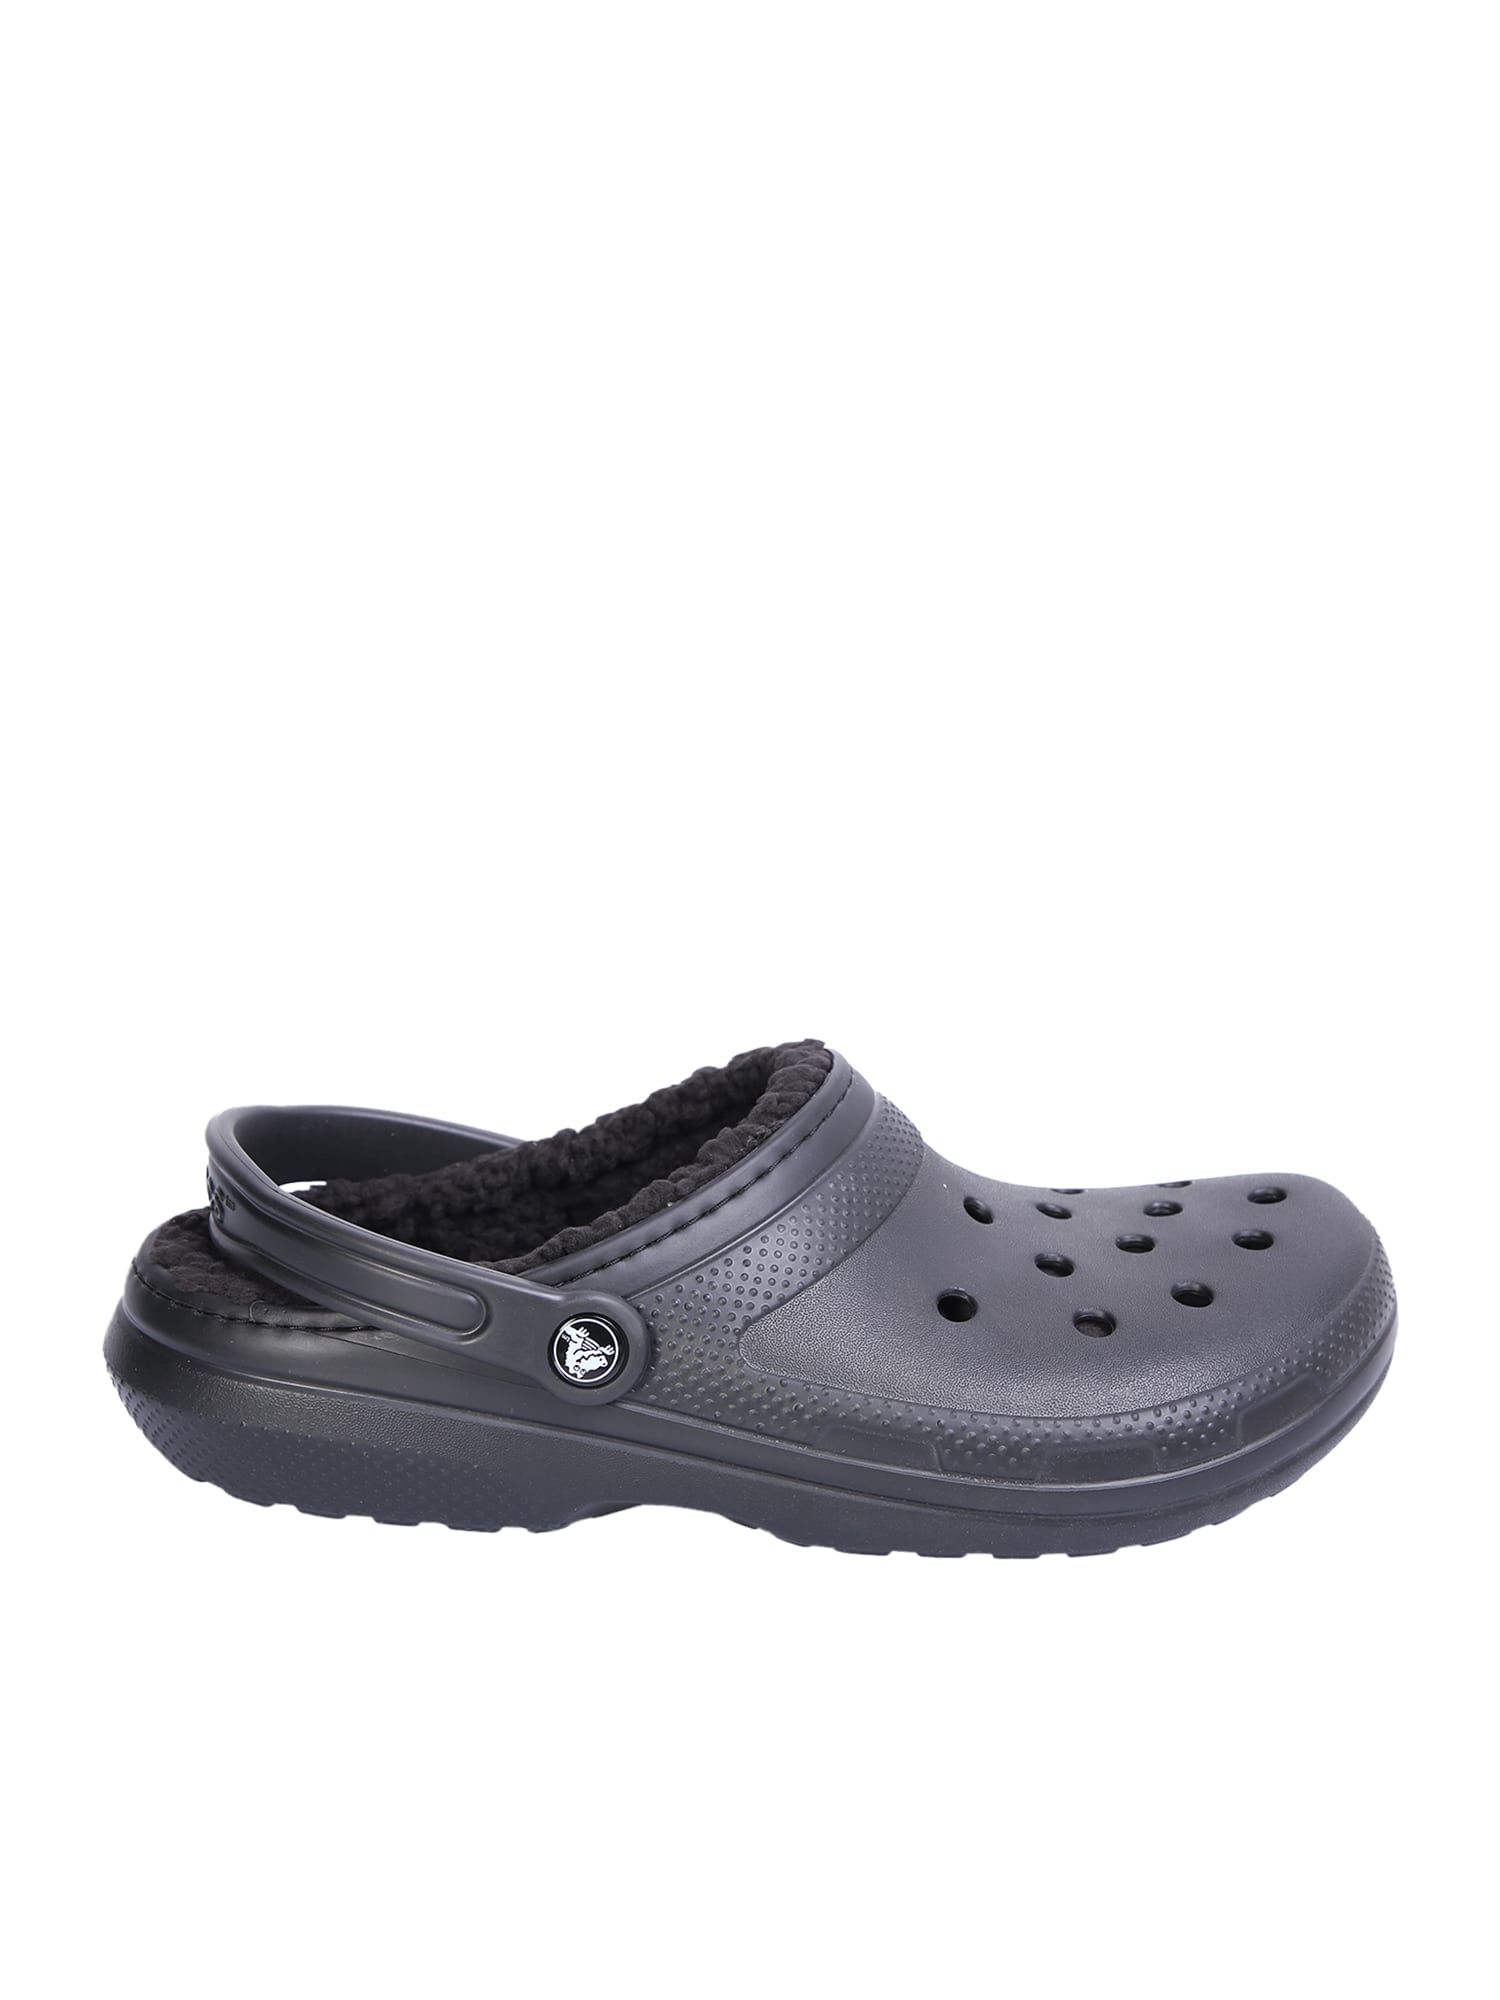 Crocs Classic Lined Clog Sandals In Black